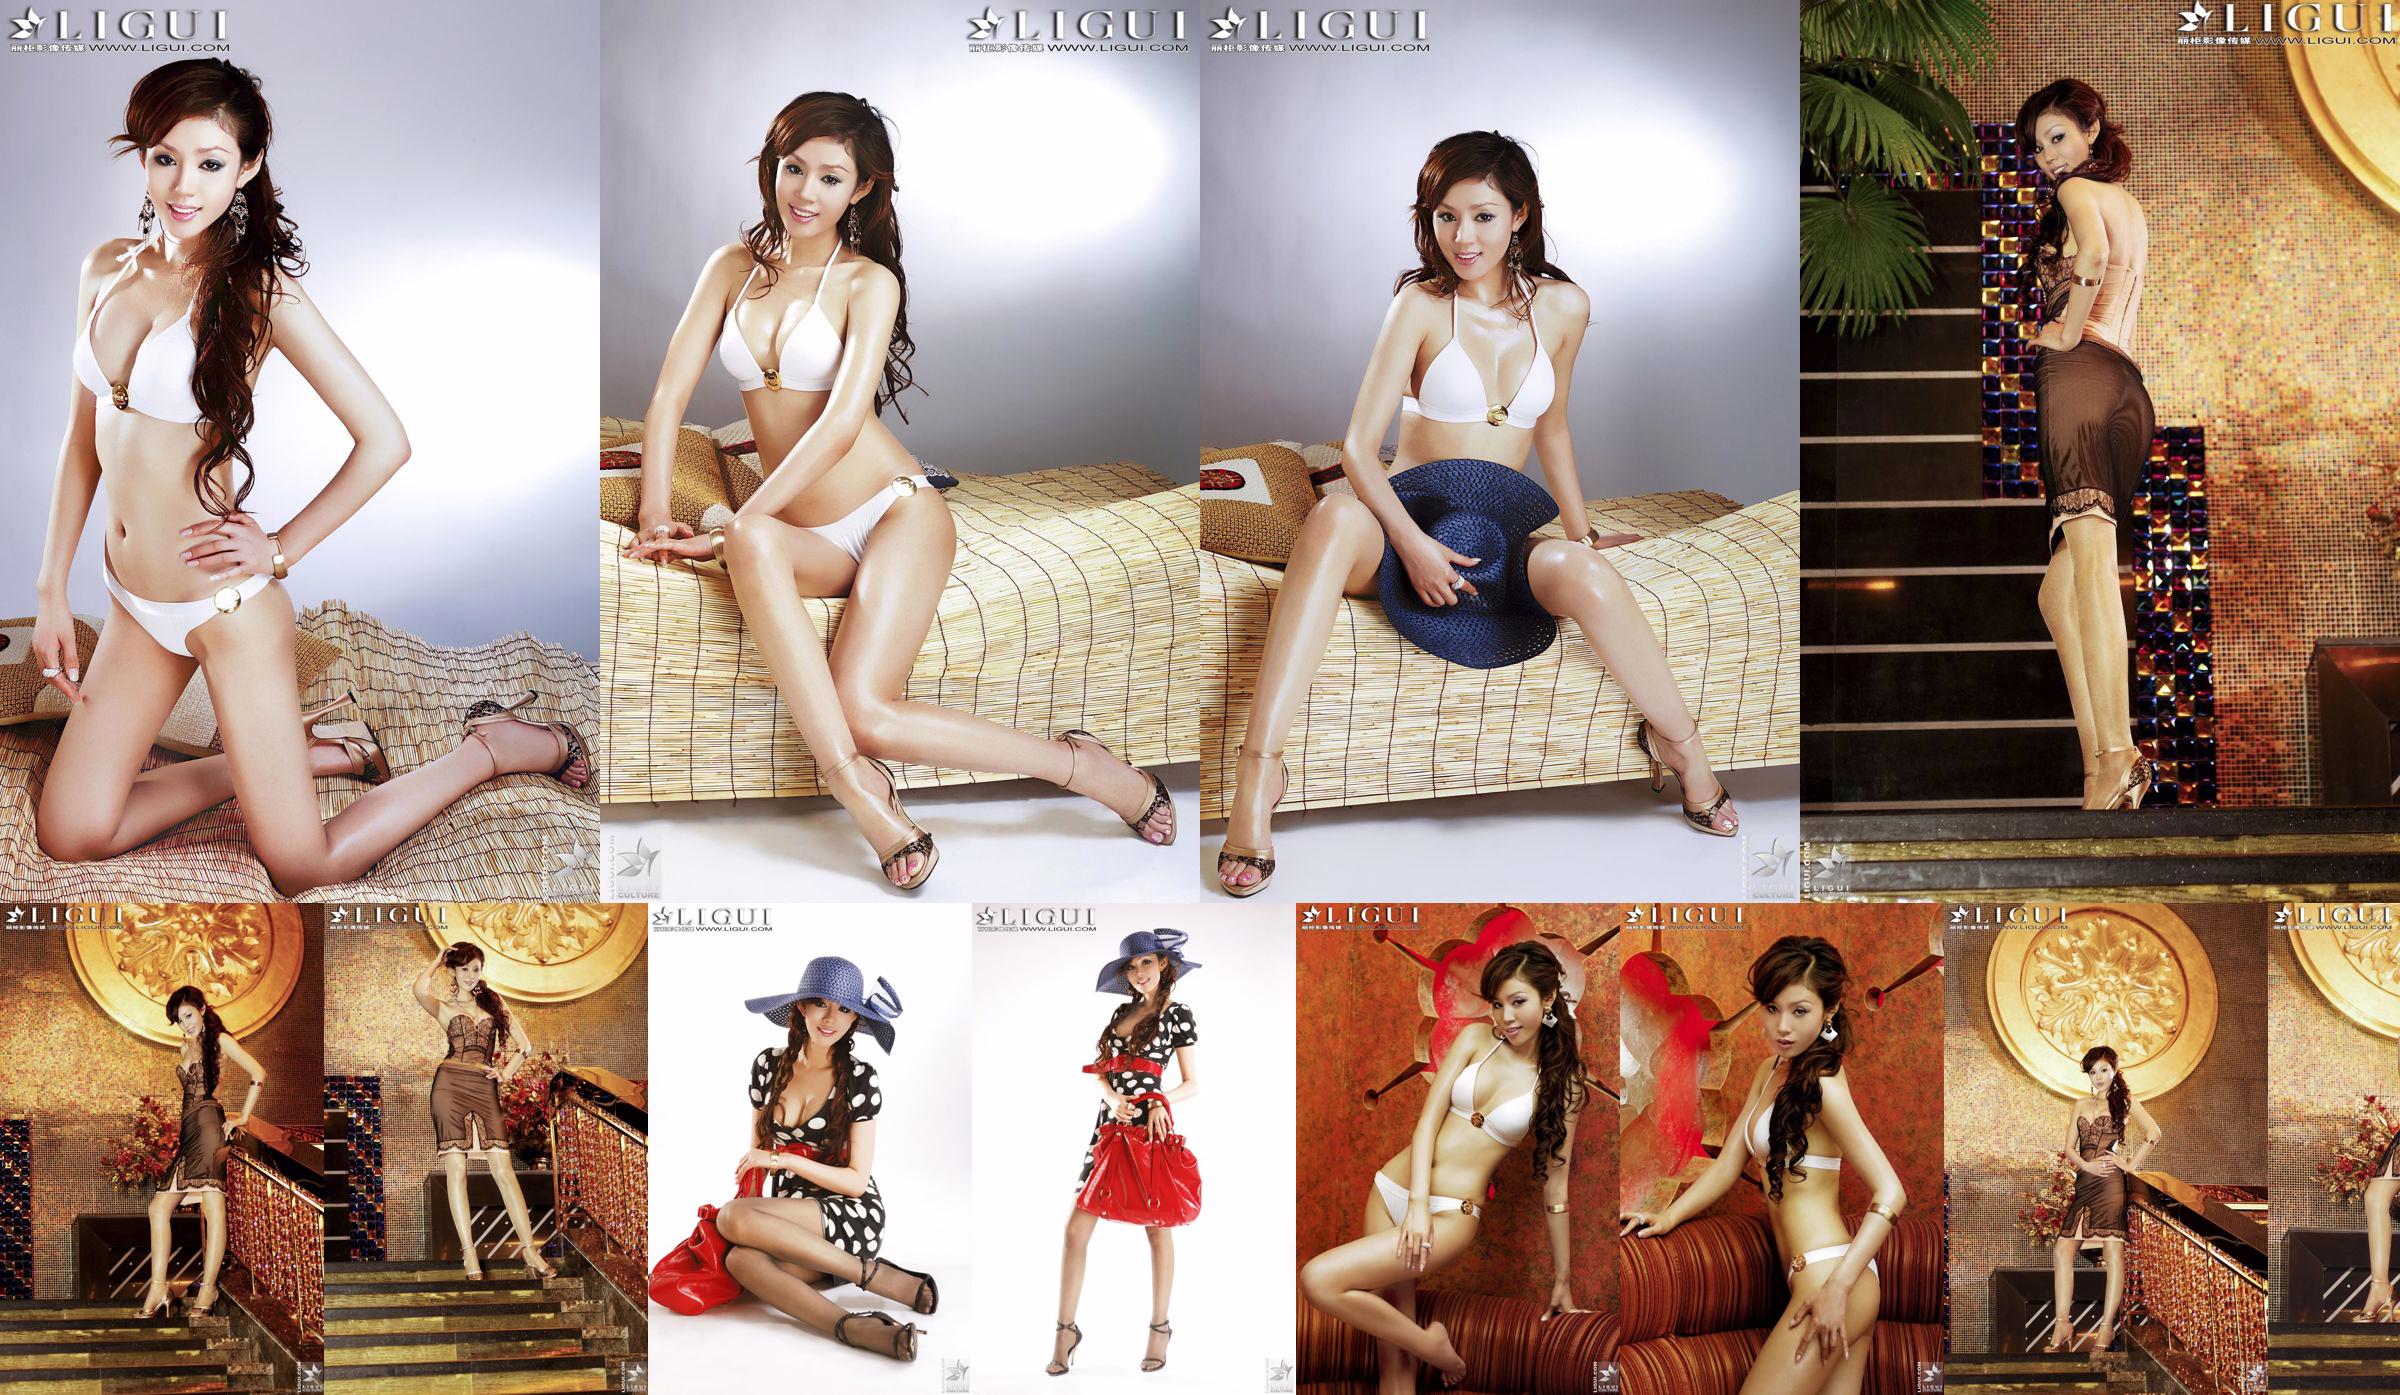 [丽 柜 LiGui] Model Yao Jinjin's "Bikini + Jurk" Mooie benen en zijdeachtige voeten Foto Foto No.95c80c Pagina 24